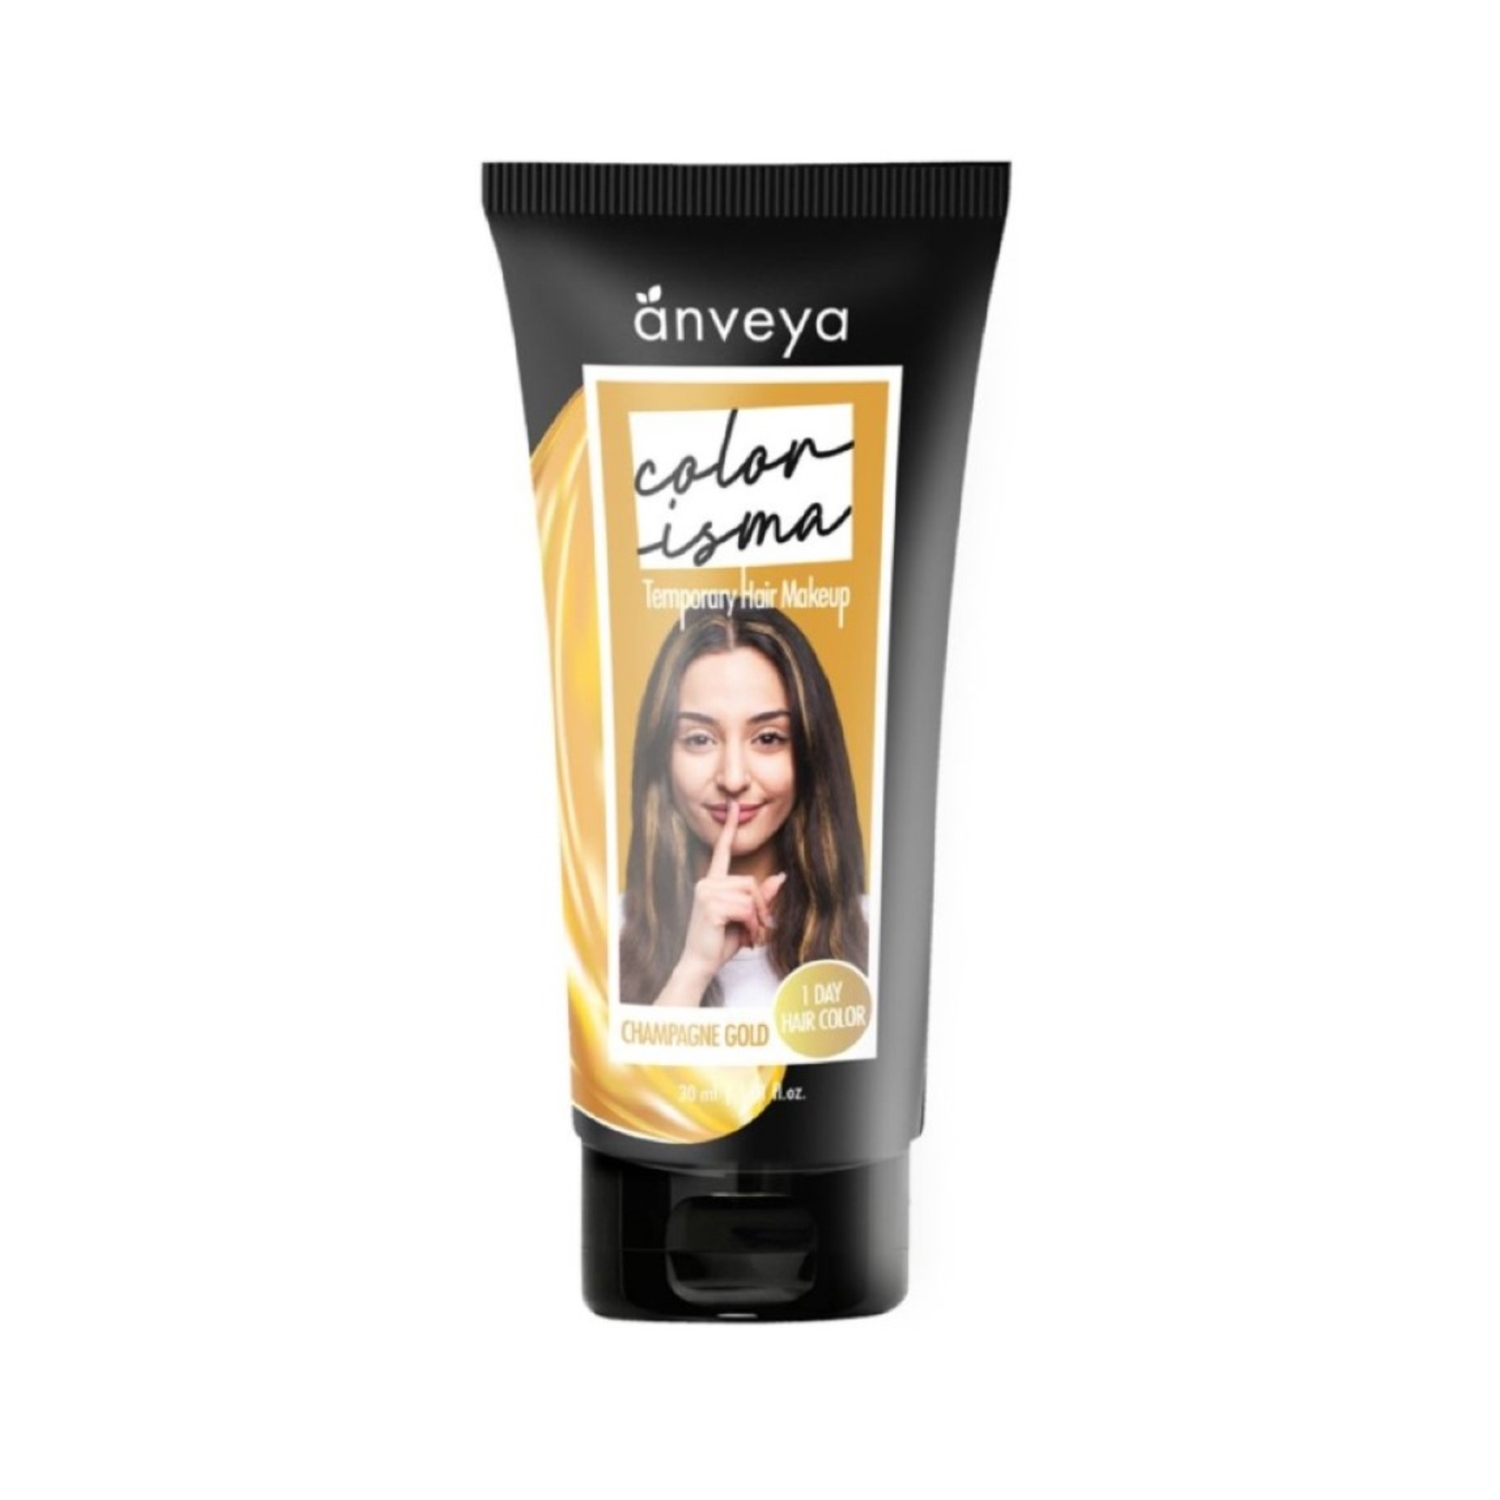 Anveya | Anveya Colorisma Hair Color Makeup - Champagne Gold (30ml)